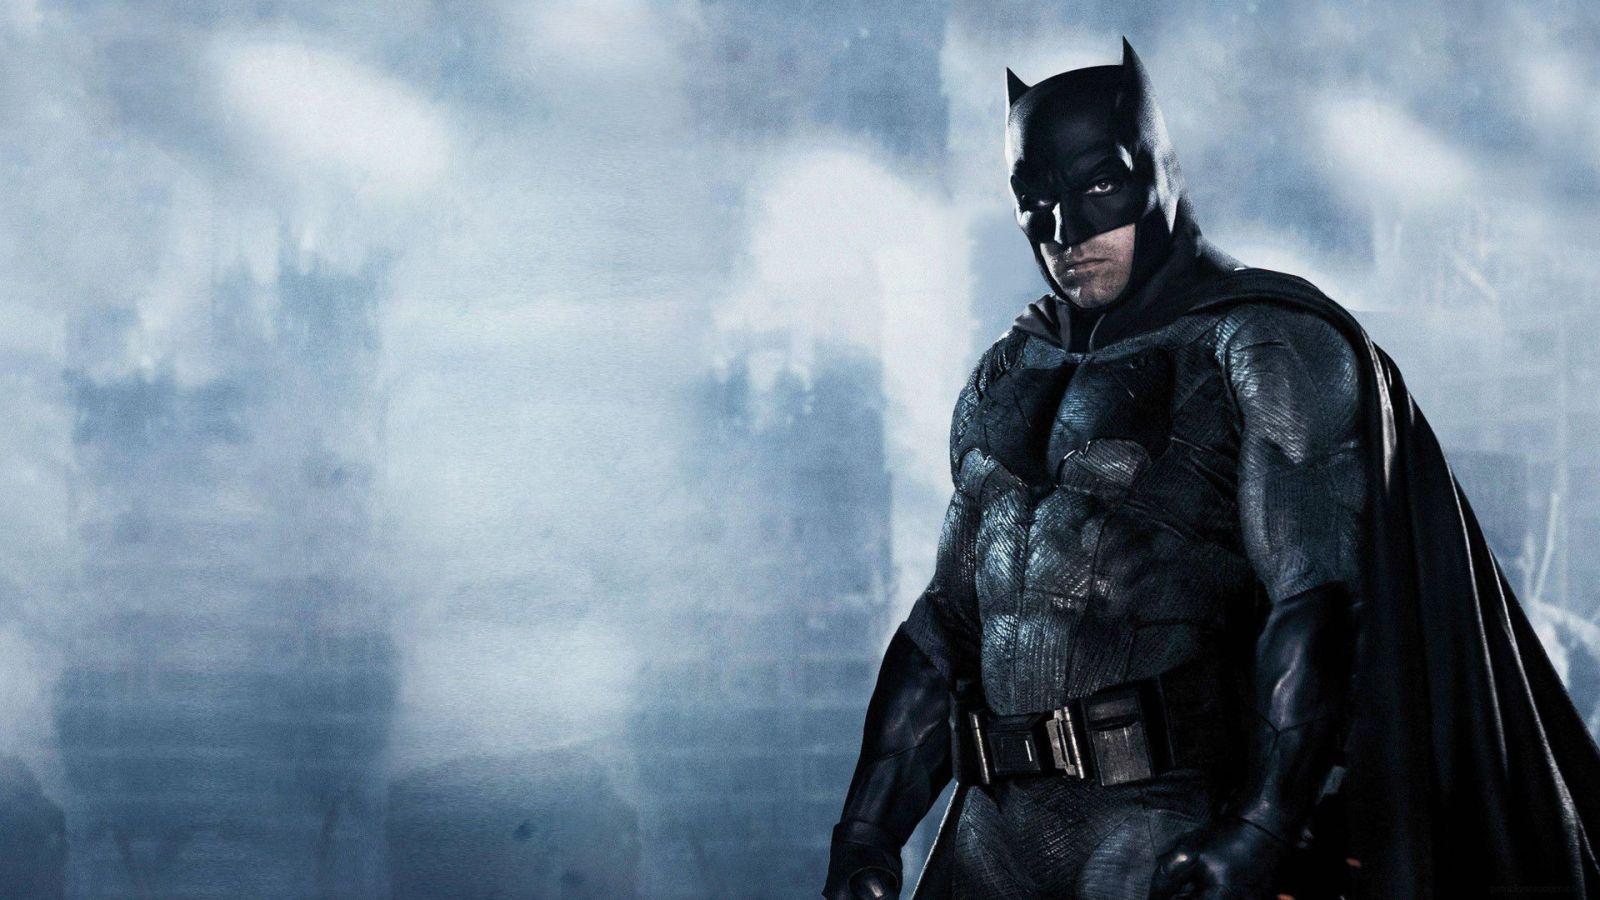 Ben Affleck Batman solo movie cast, release date, plot